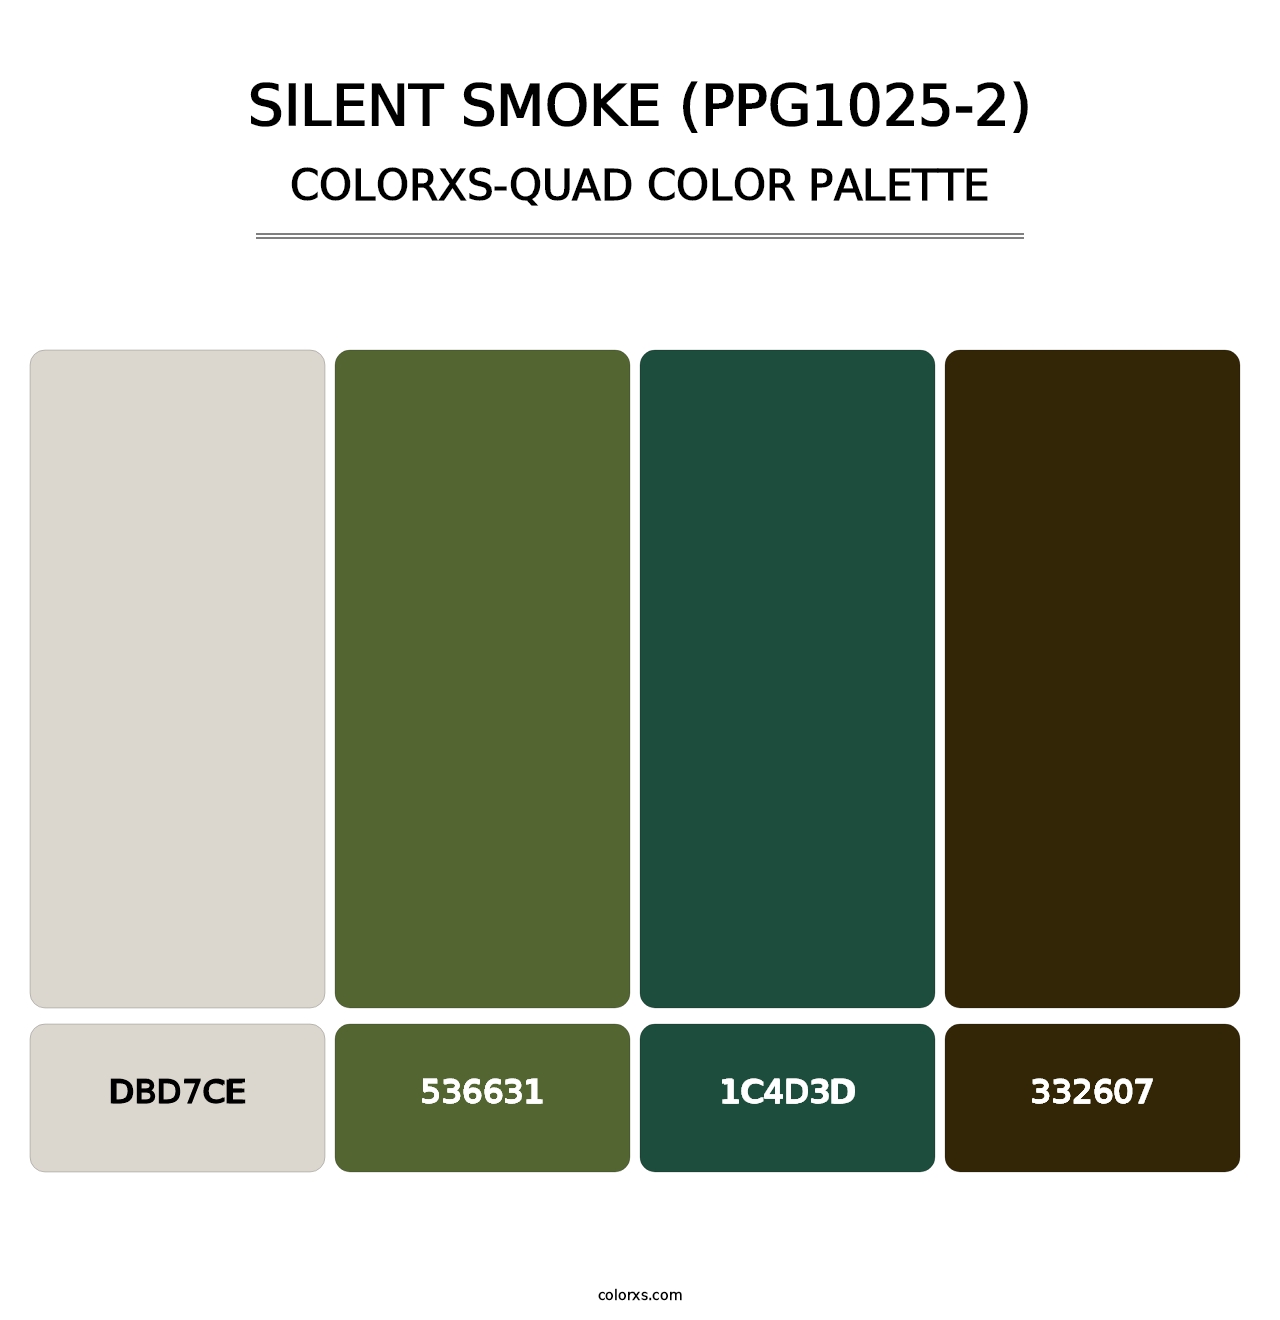 Silent Smoke (PPG1025-2) - Colorxs Quad Palette